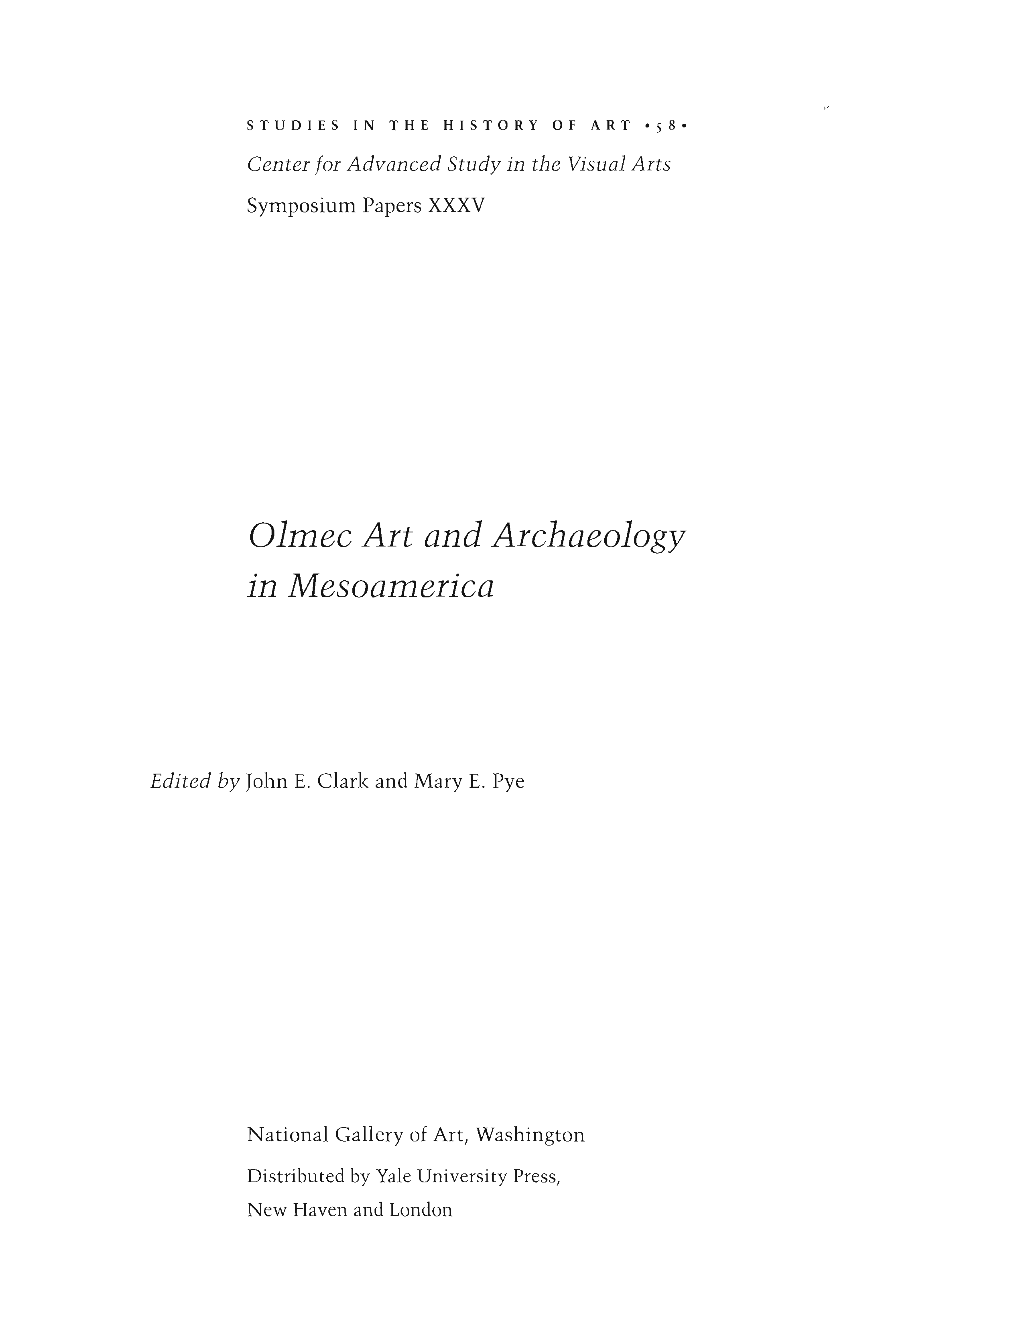 Olmec Art and Archaeology in Mesoamerica